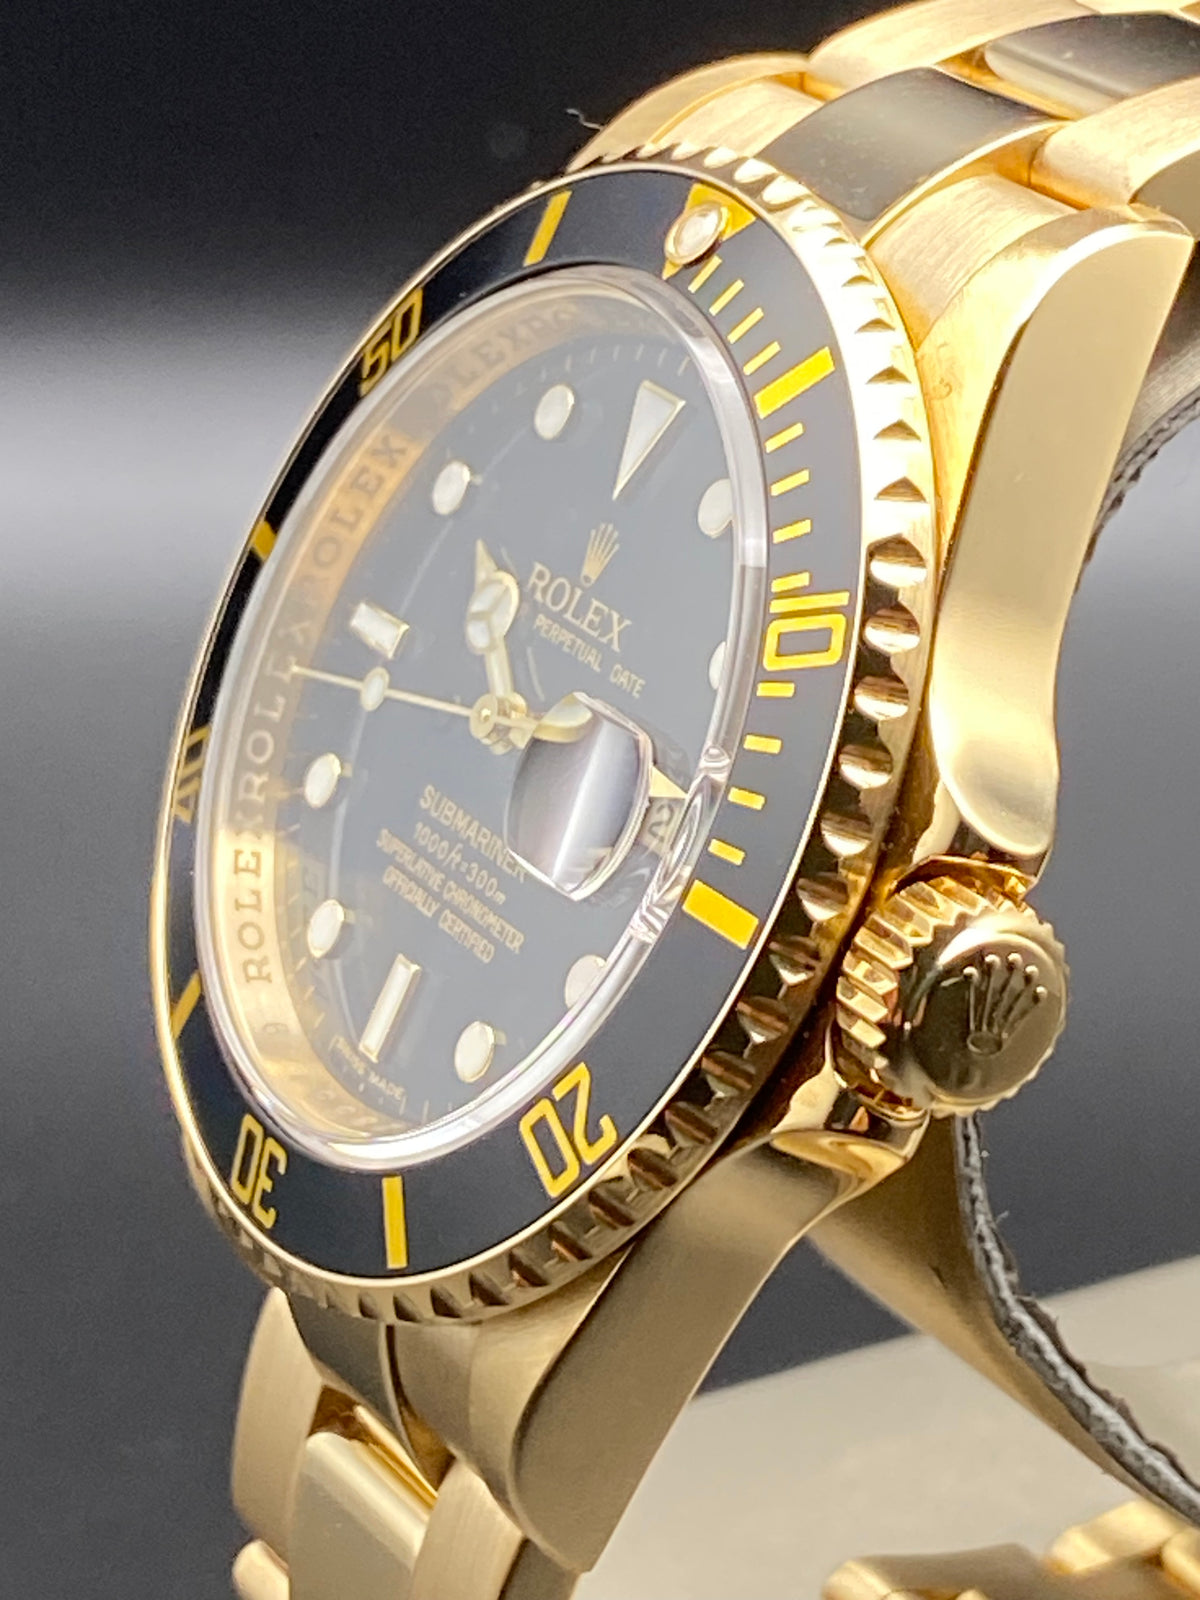 Rolex Yellow Gold Submariner Date - 2011 - Pre Ceramic Black Bezel - Black Dial - 16618LN